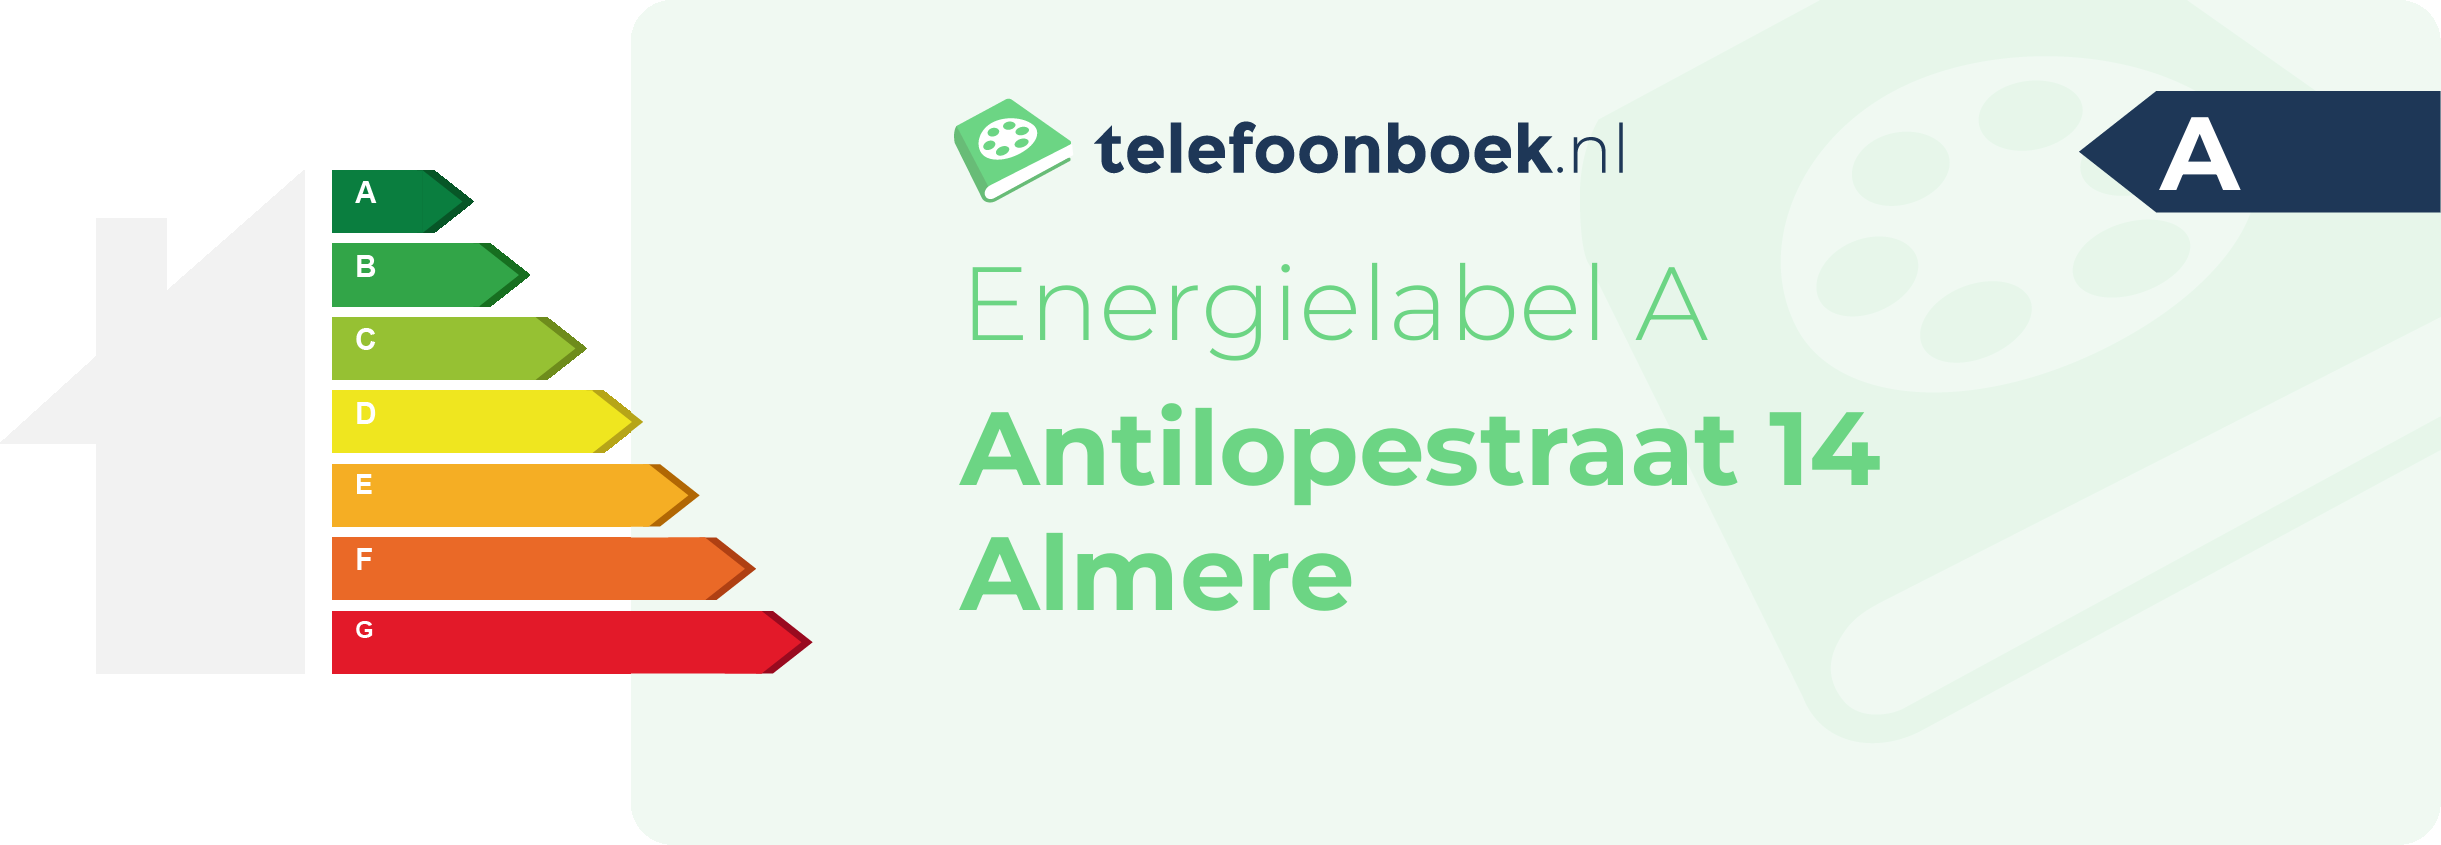 Energielabel Antilopestraat 14 Almere